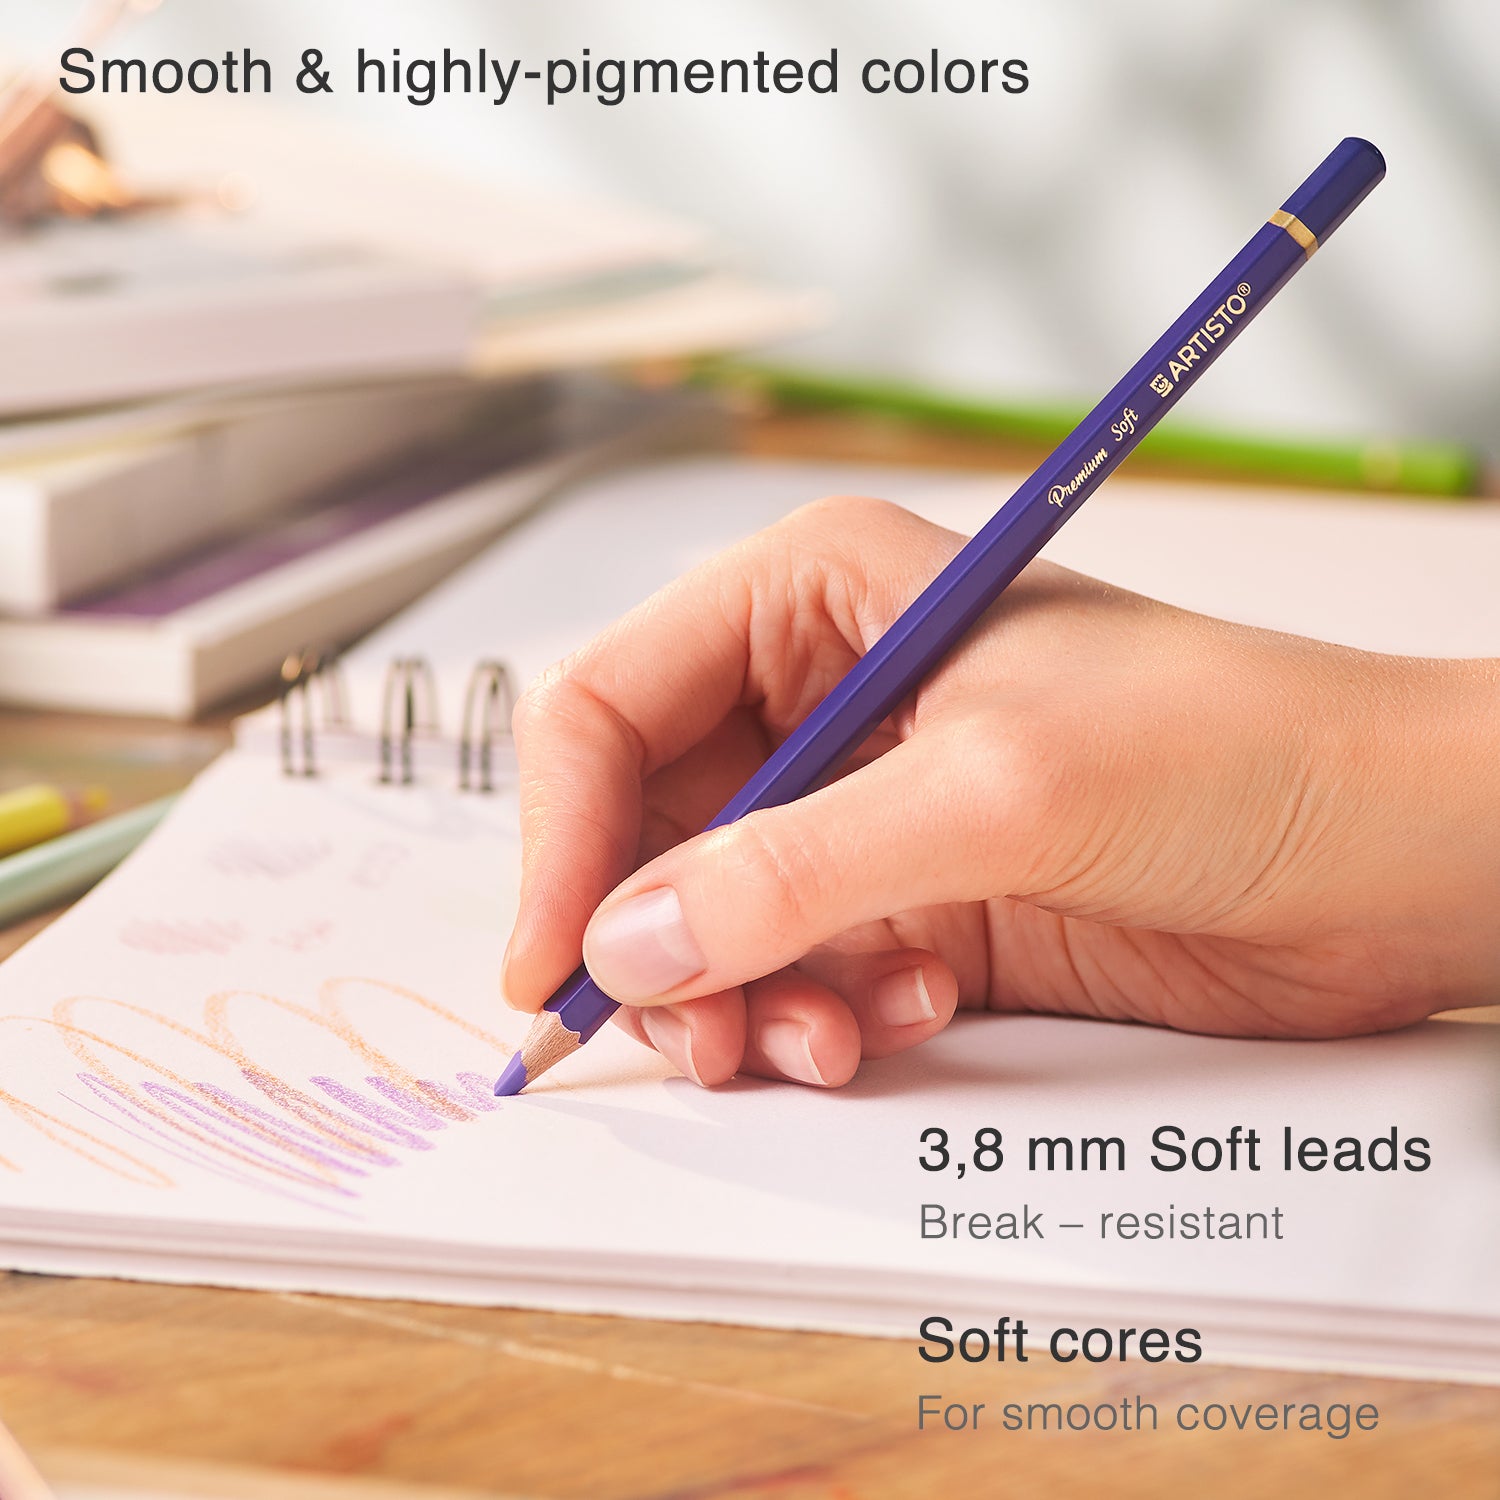 muousco 72 Professional Colored Pencil Set for Adult Coloring Books -  Premium Art Coloring Pencils kit with Vibrant… - Colored Pencils.net